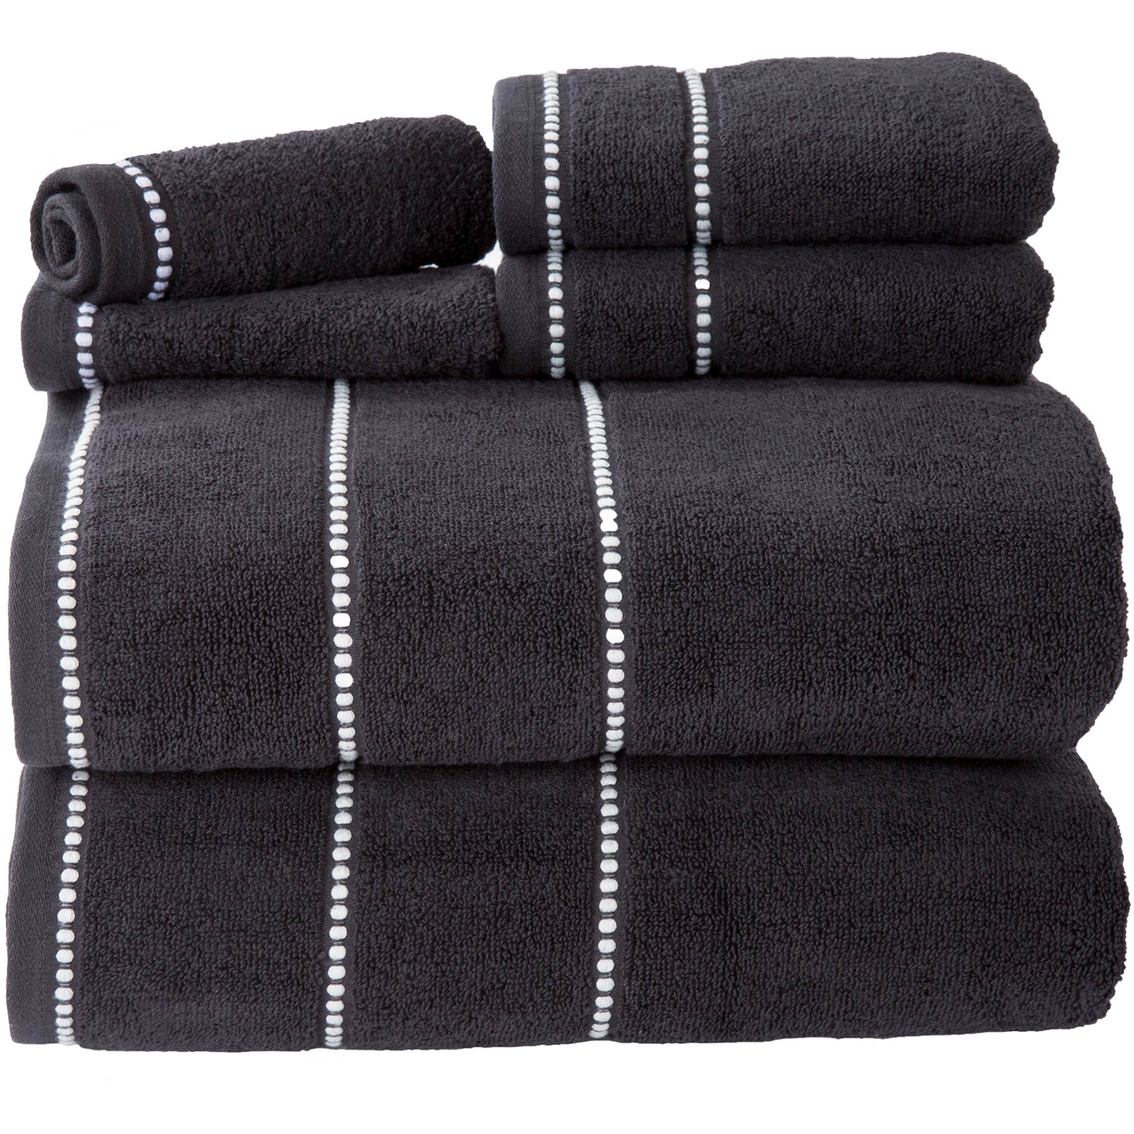 Lavish Home Quick Dry 100% Cotton Zero Twist 6 Pc Towel Set - Image 1 of 4